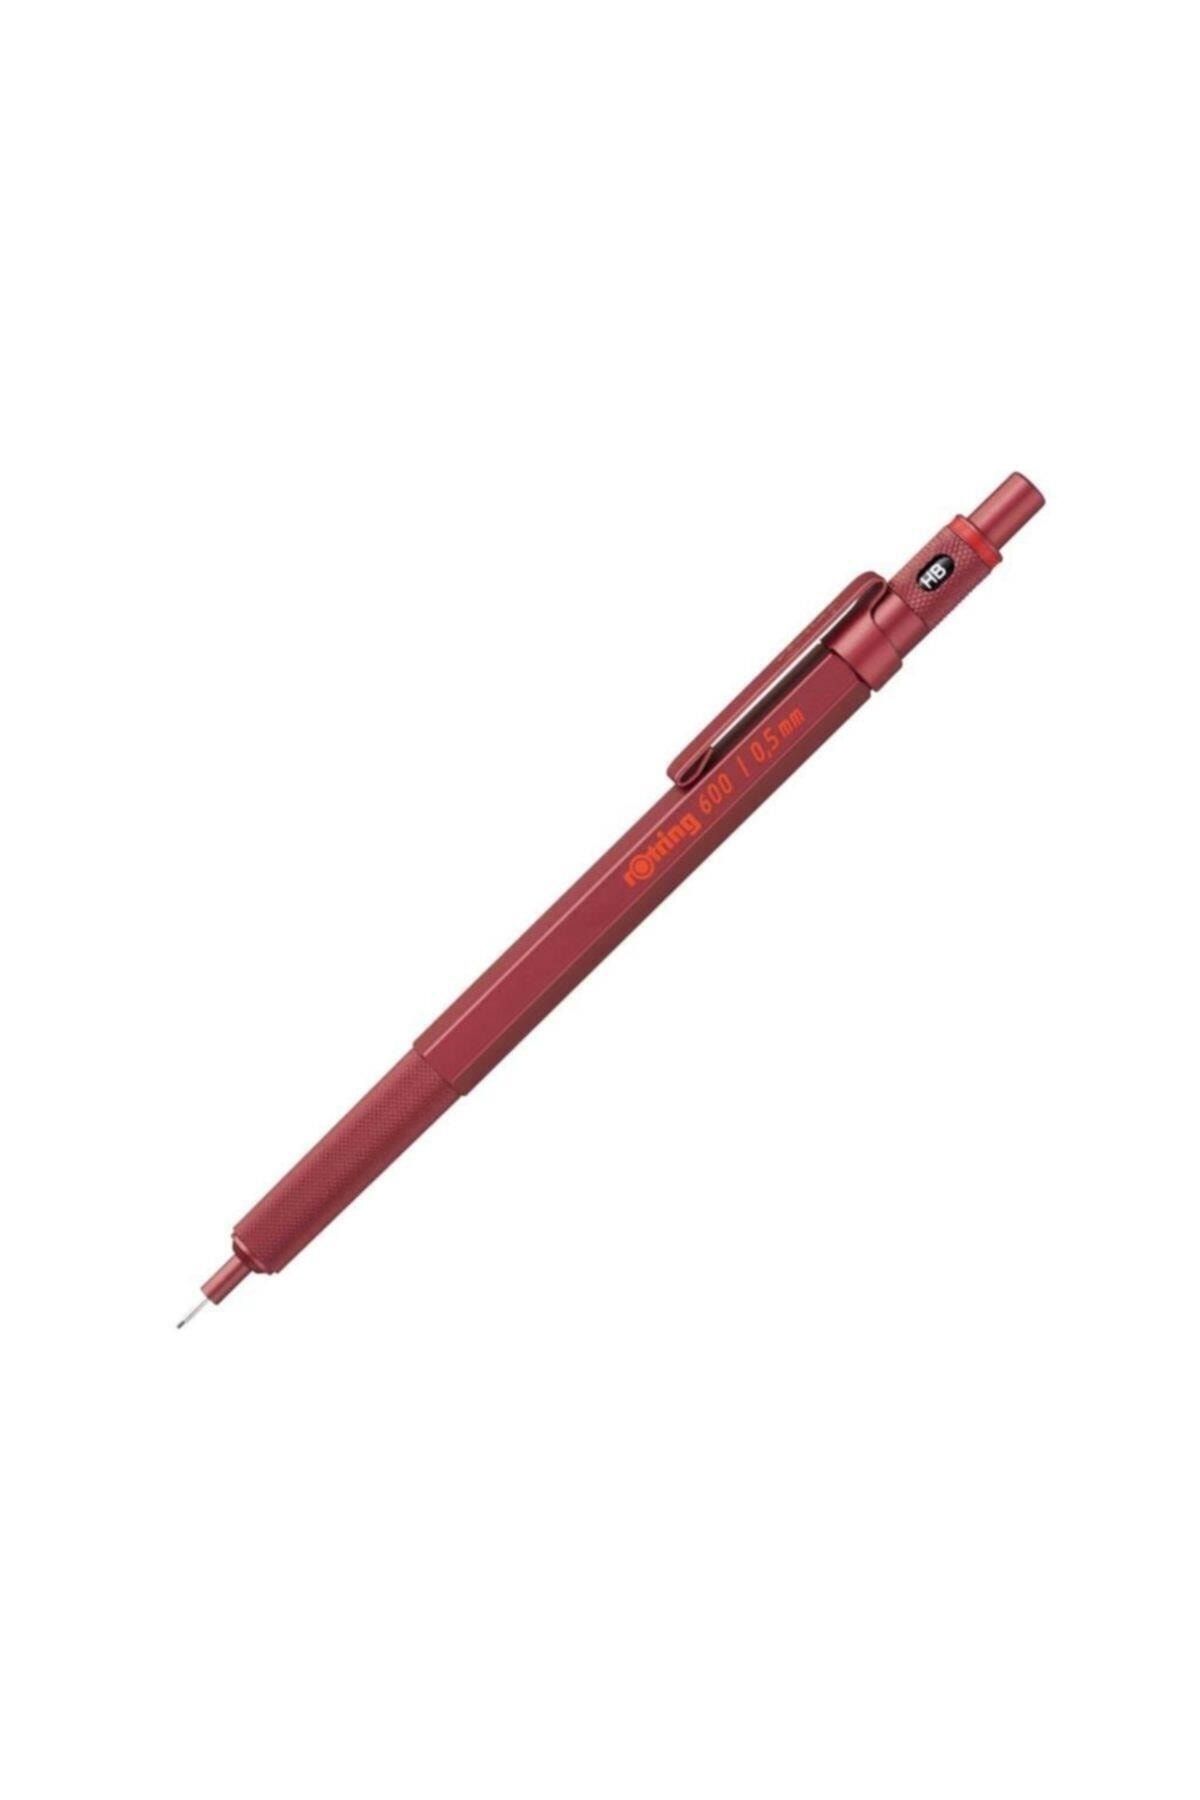 Rotring Versatil Kalem 600 0.5 MM Kırmızı Uçlun Kalem